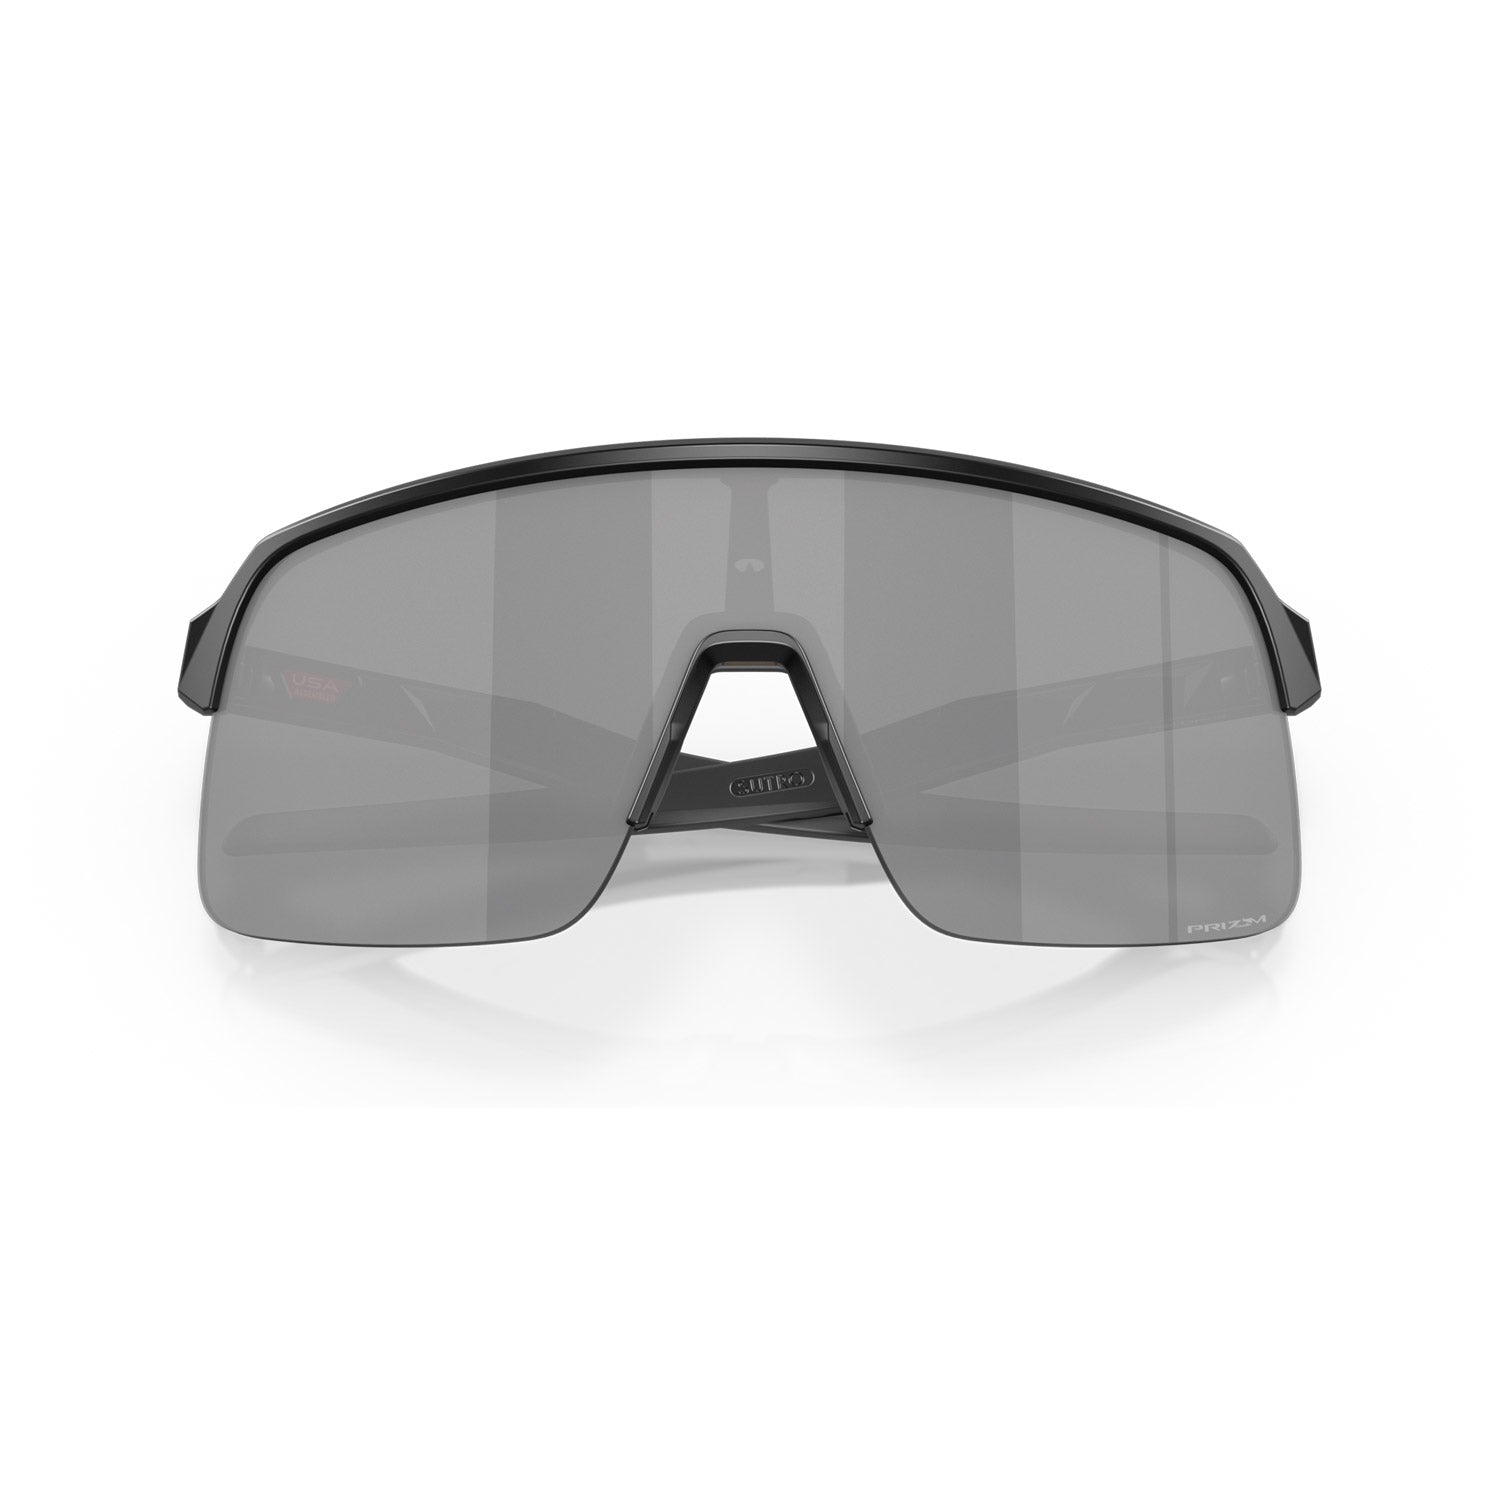 Sutro Lite Sunglasses Matte Black - Prizm Black Lens